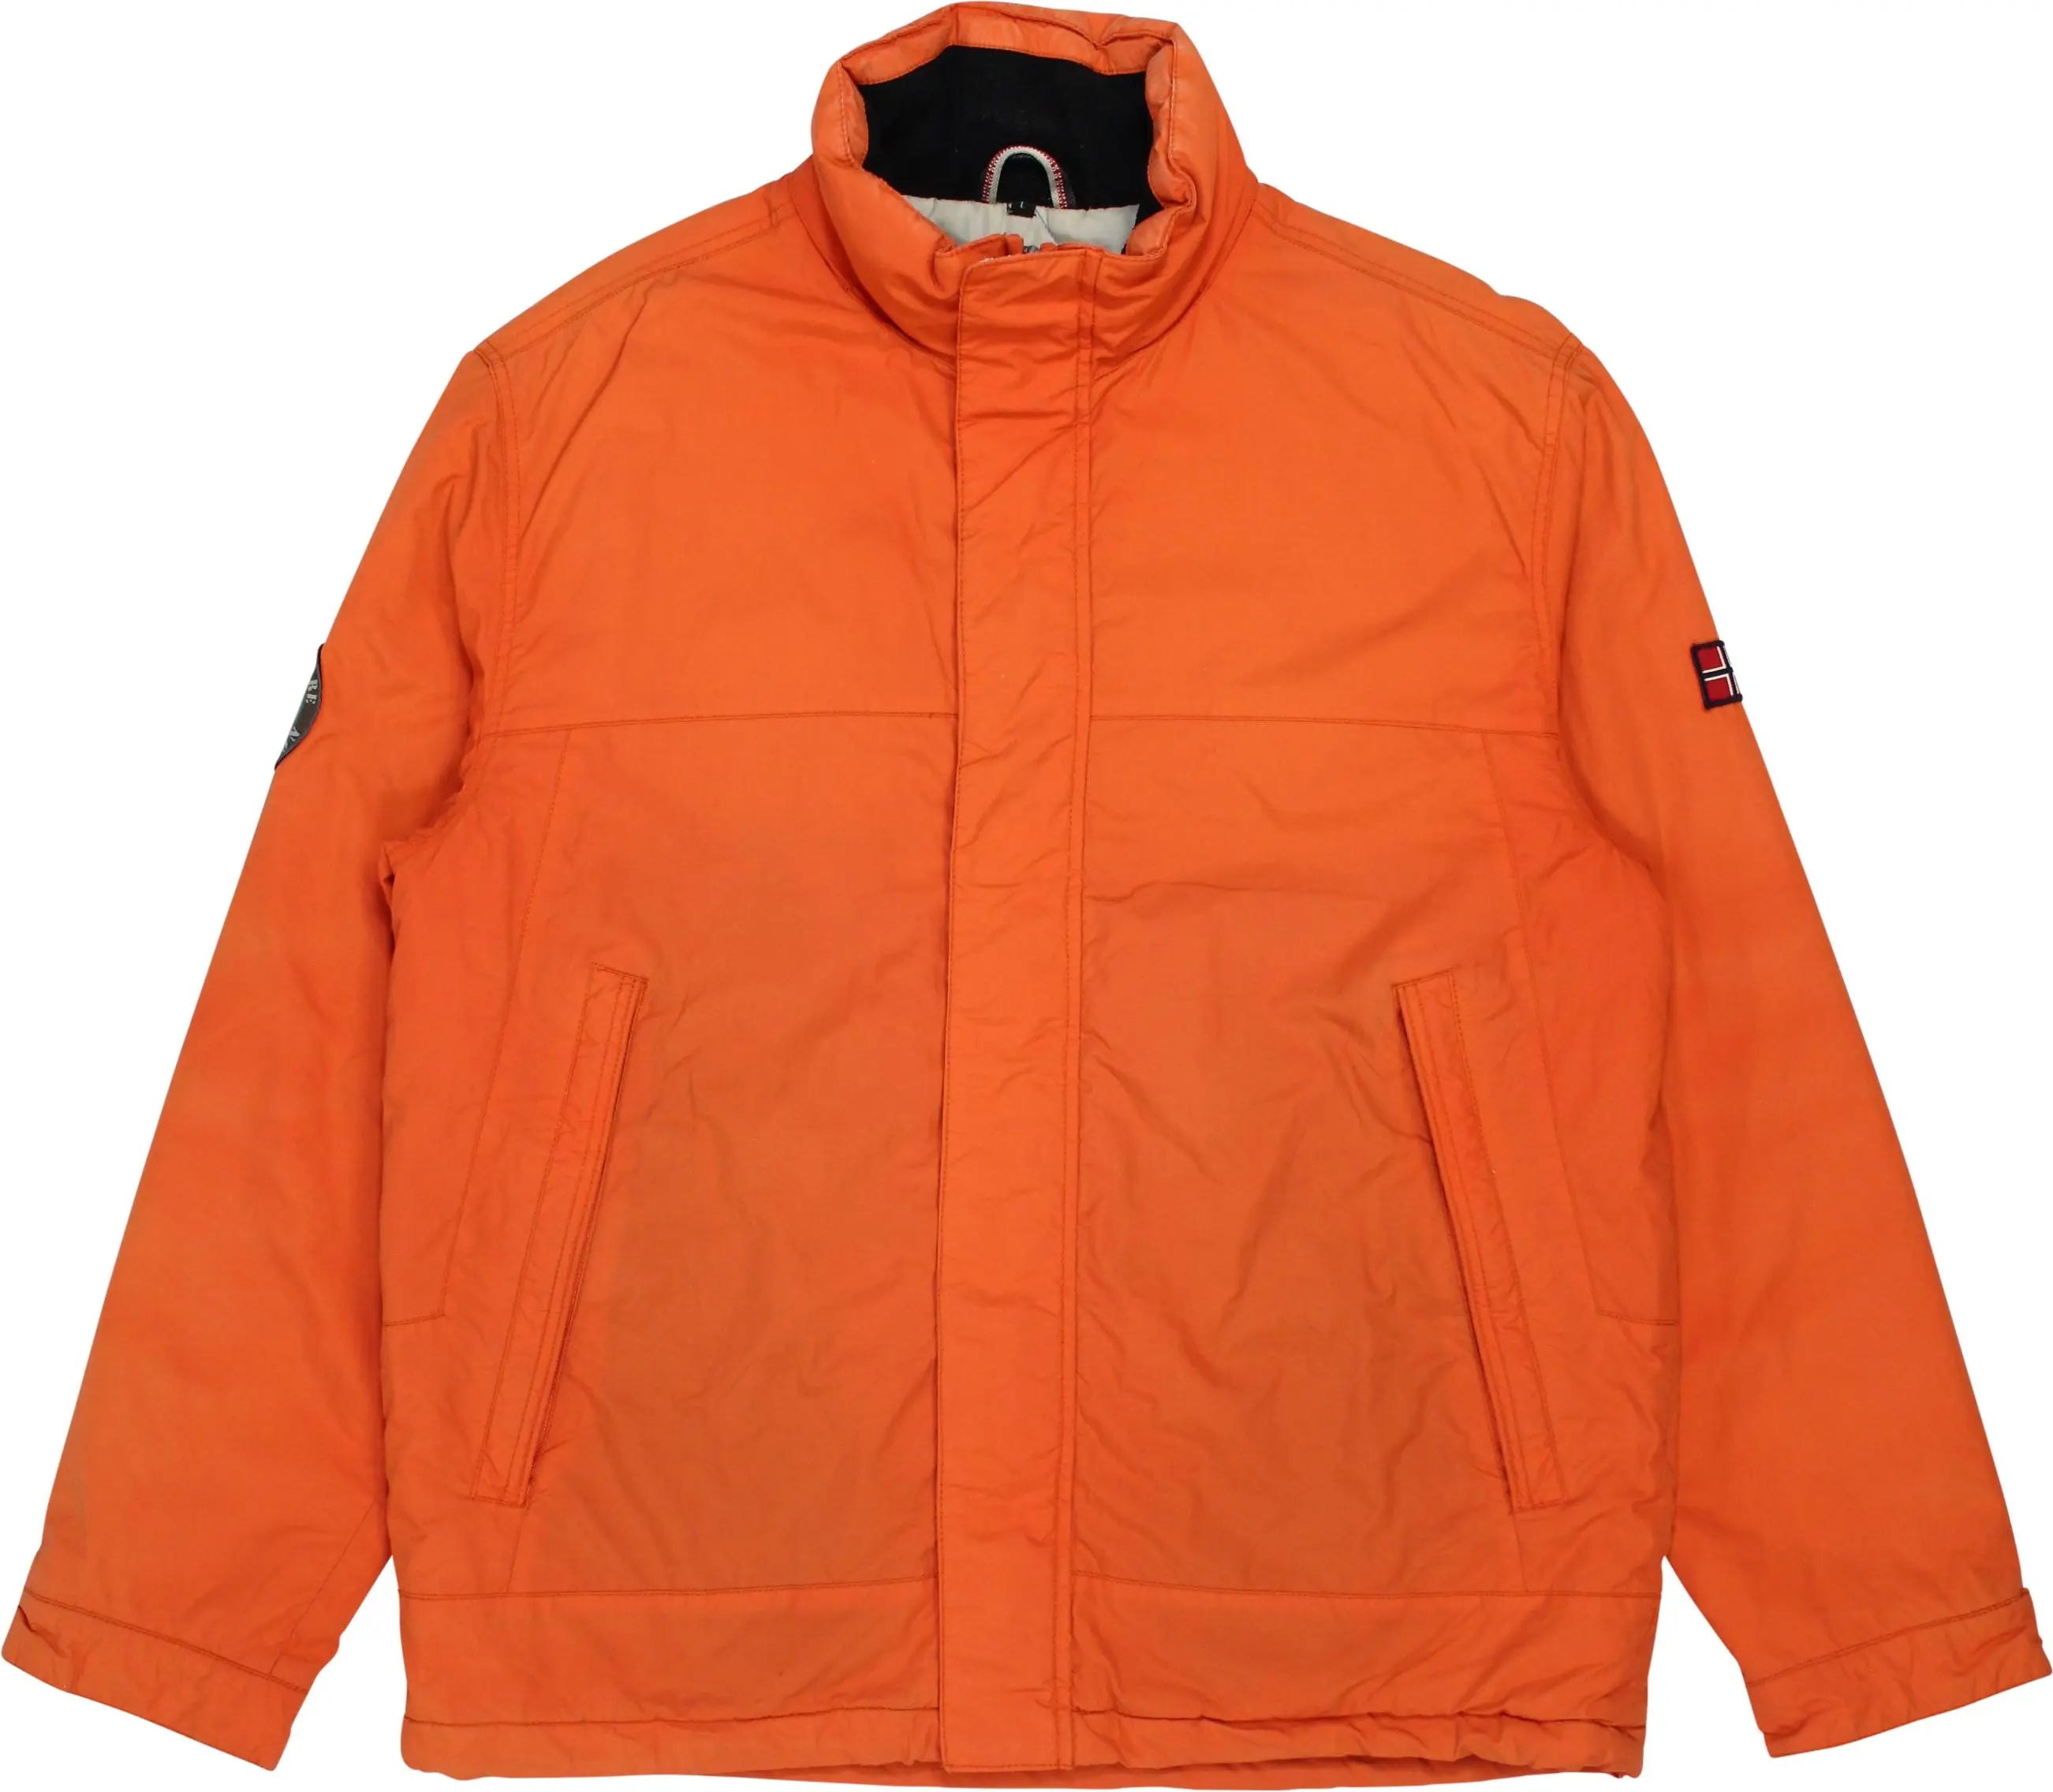 Gentlewear - Orange Winter Jacket- ThriftTale.com - Vintage and second handclothing